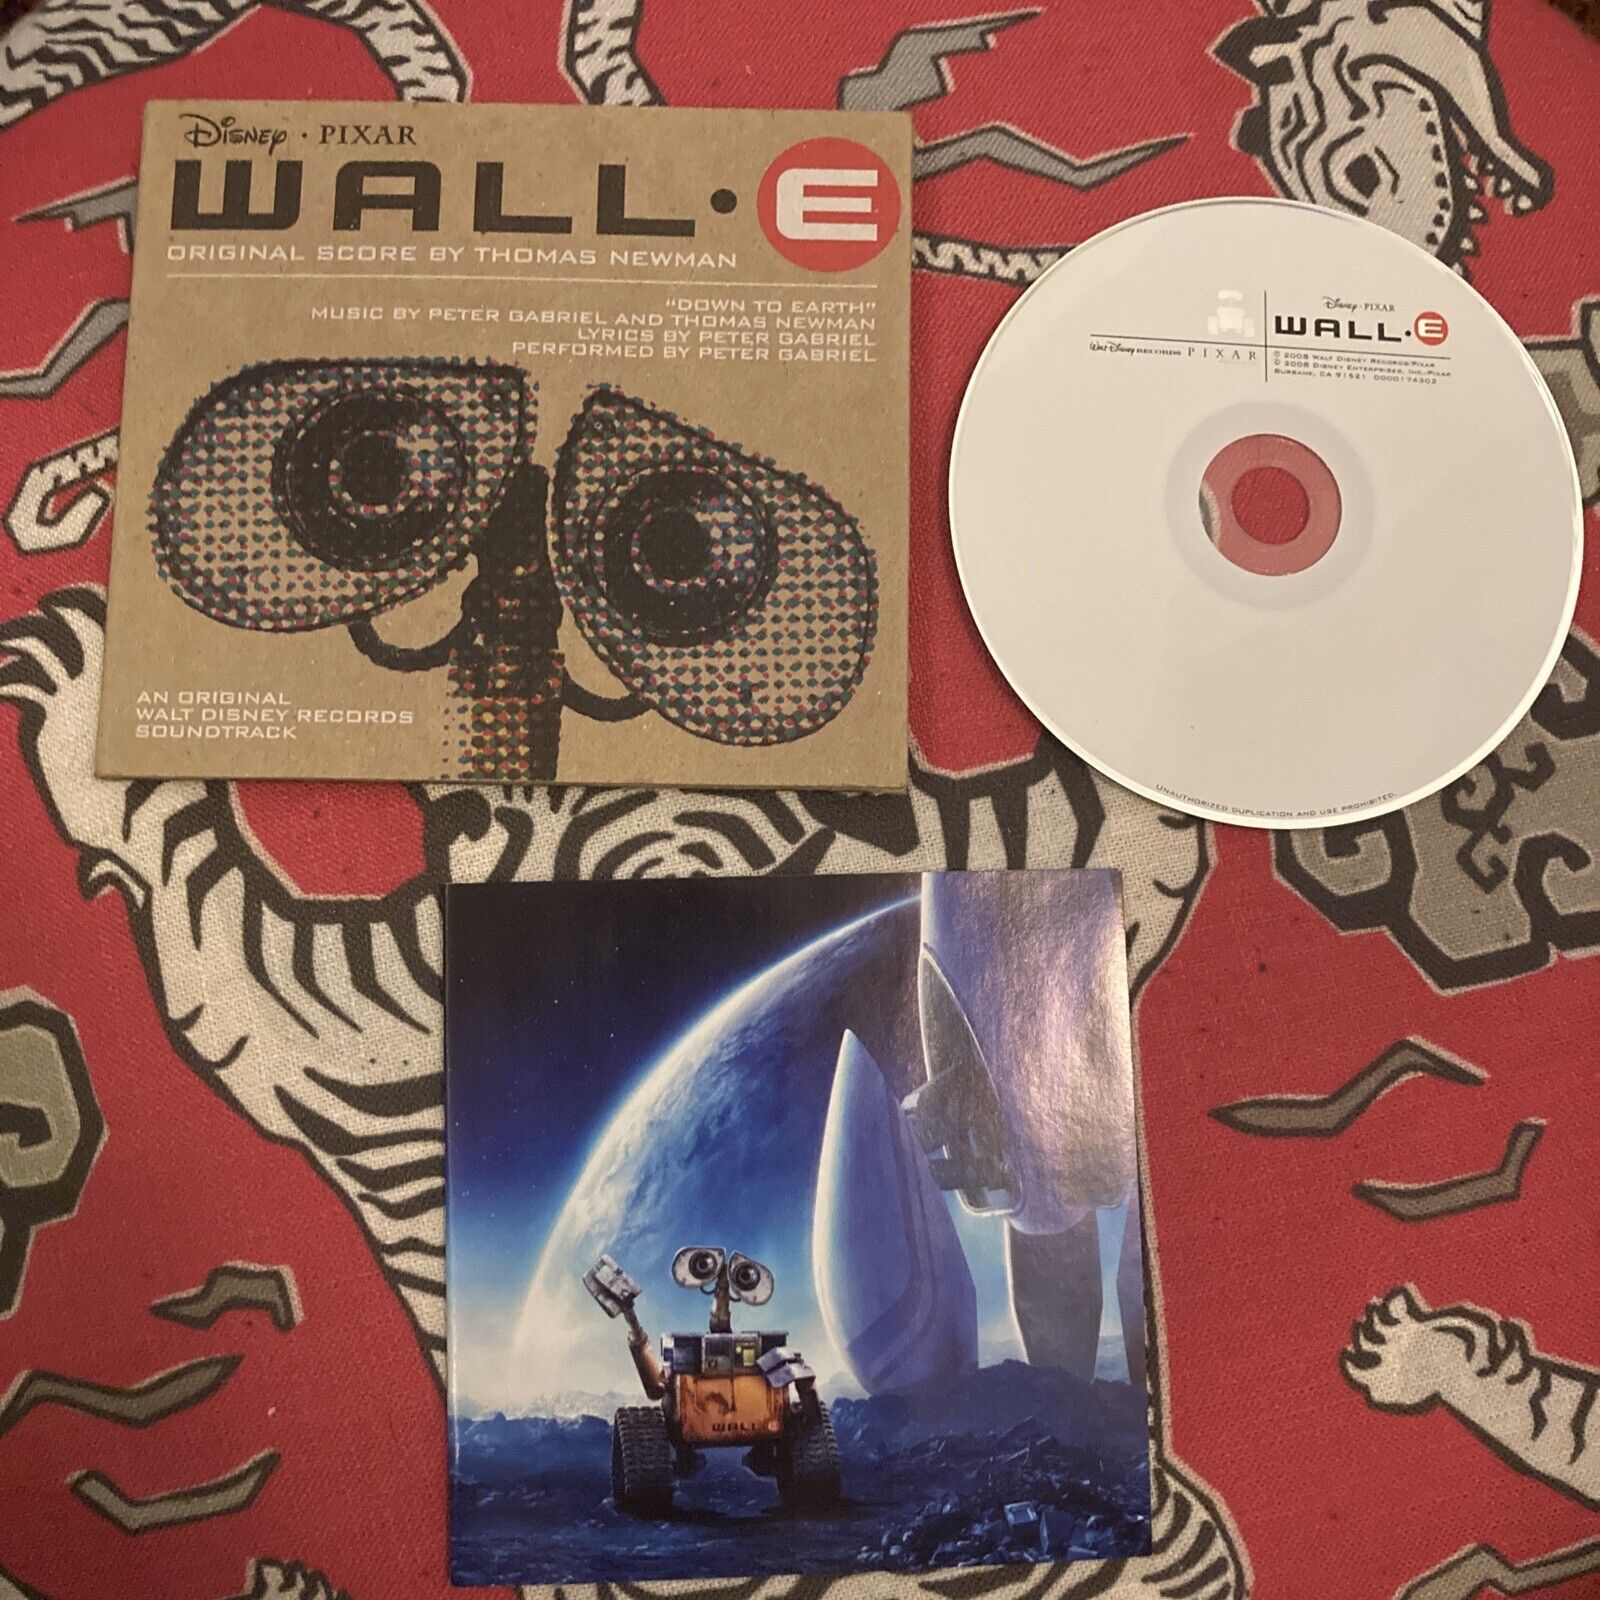 WALL-E [Original Score] by Thomas Newman (CD, Jun-2008, Disney)